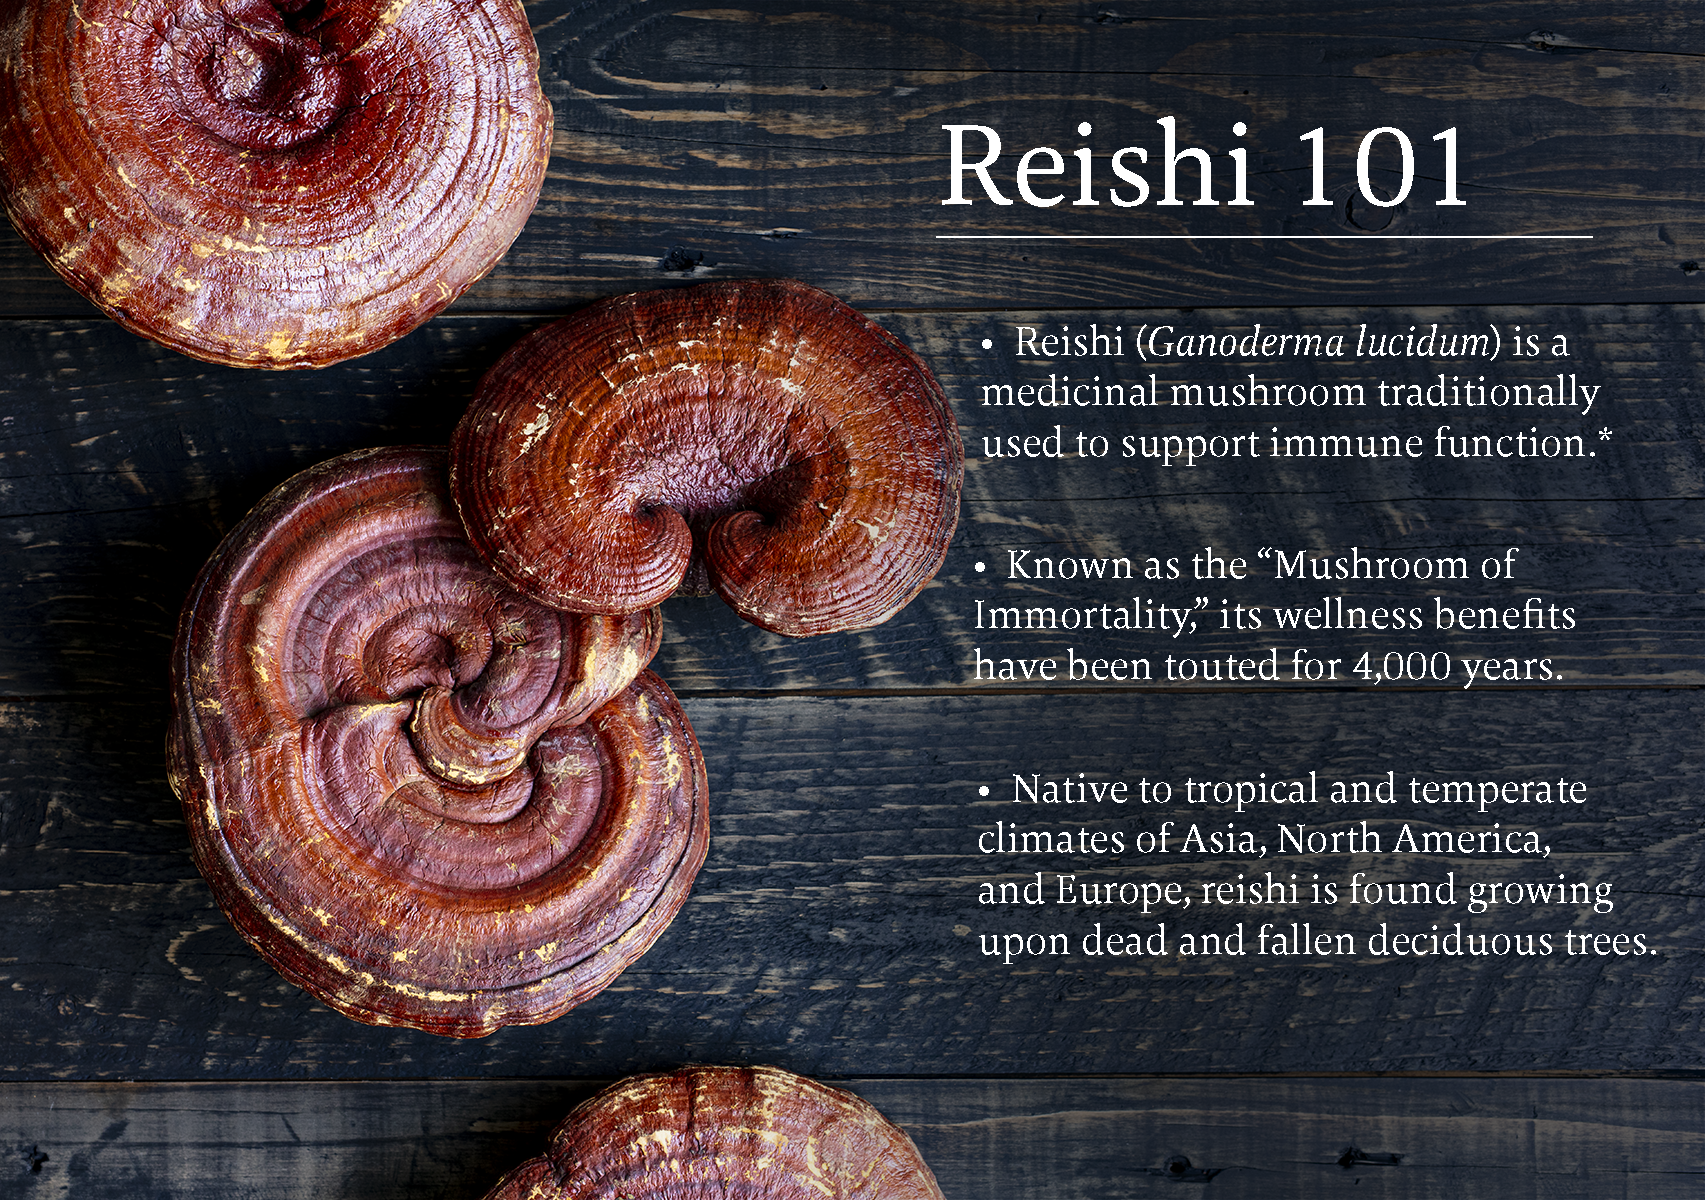 Infographic for reishi mushrooms